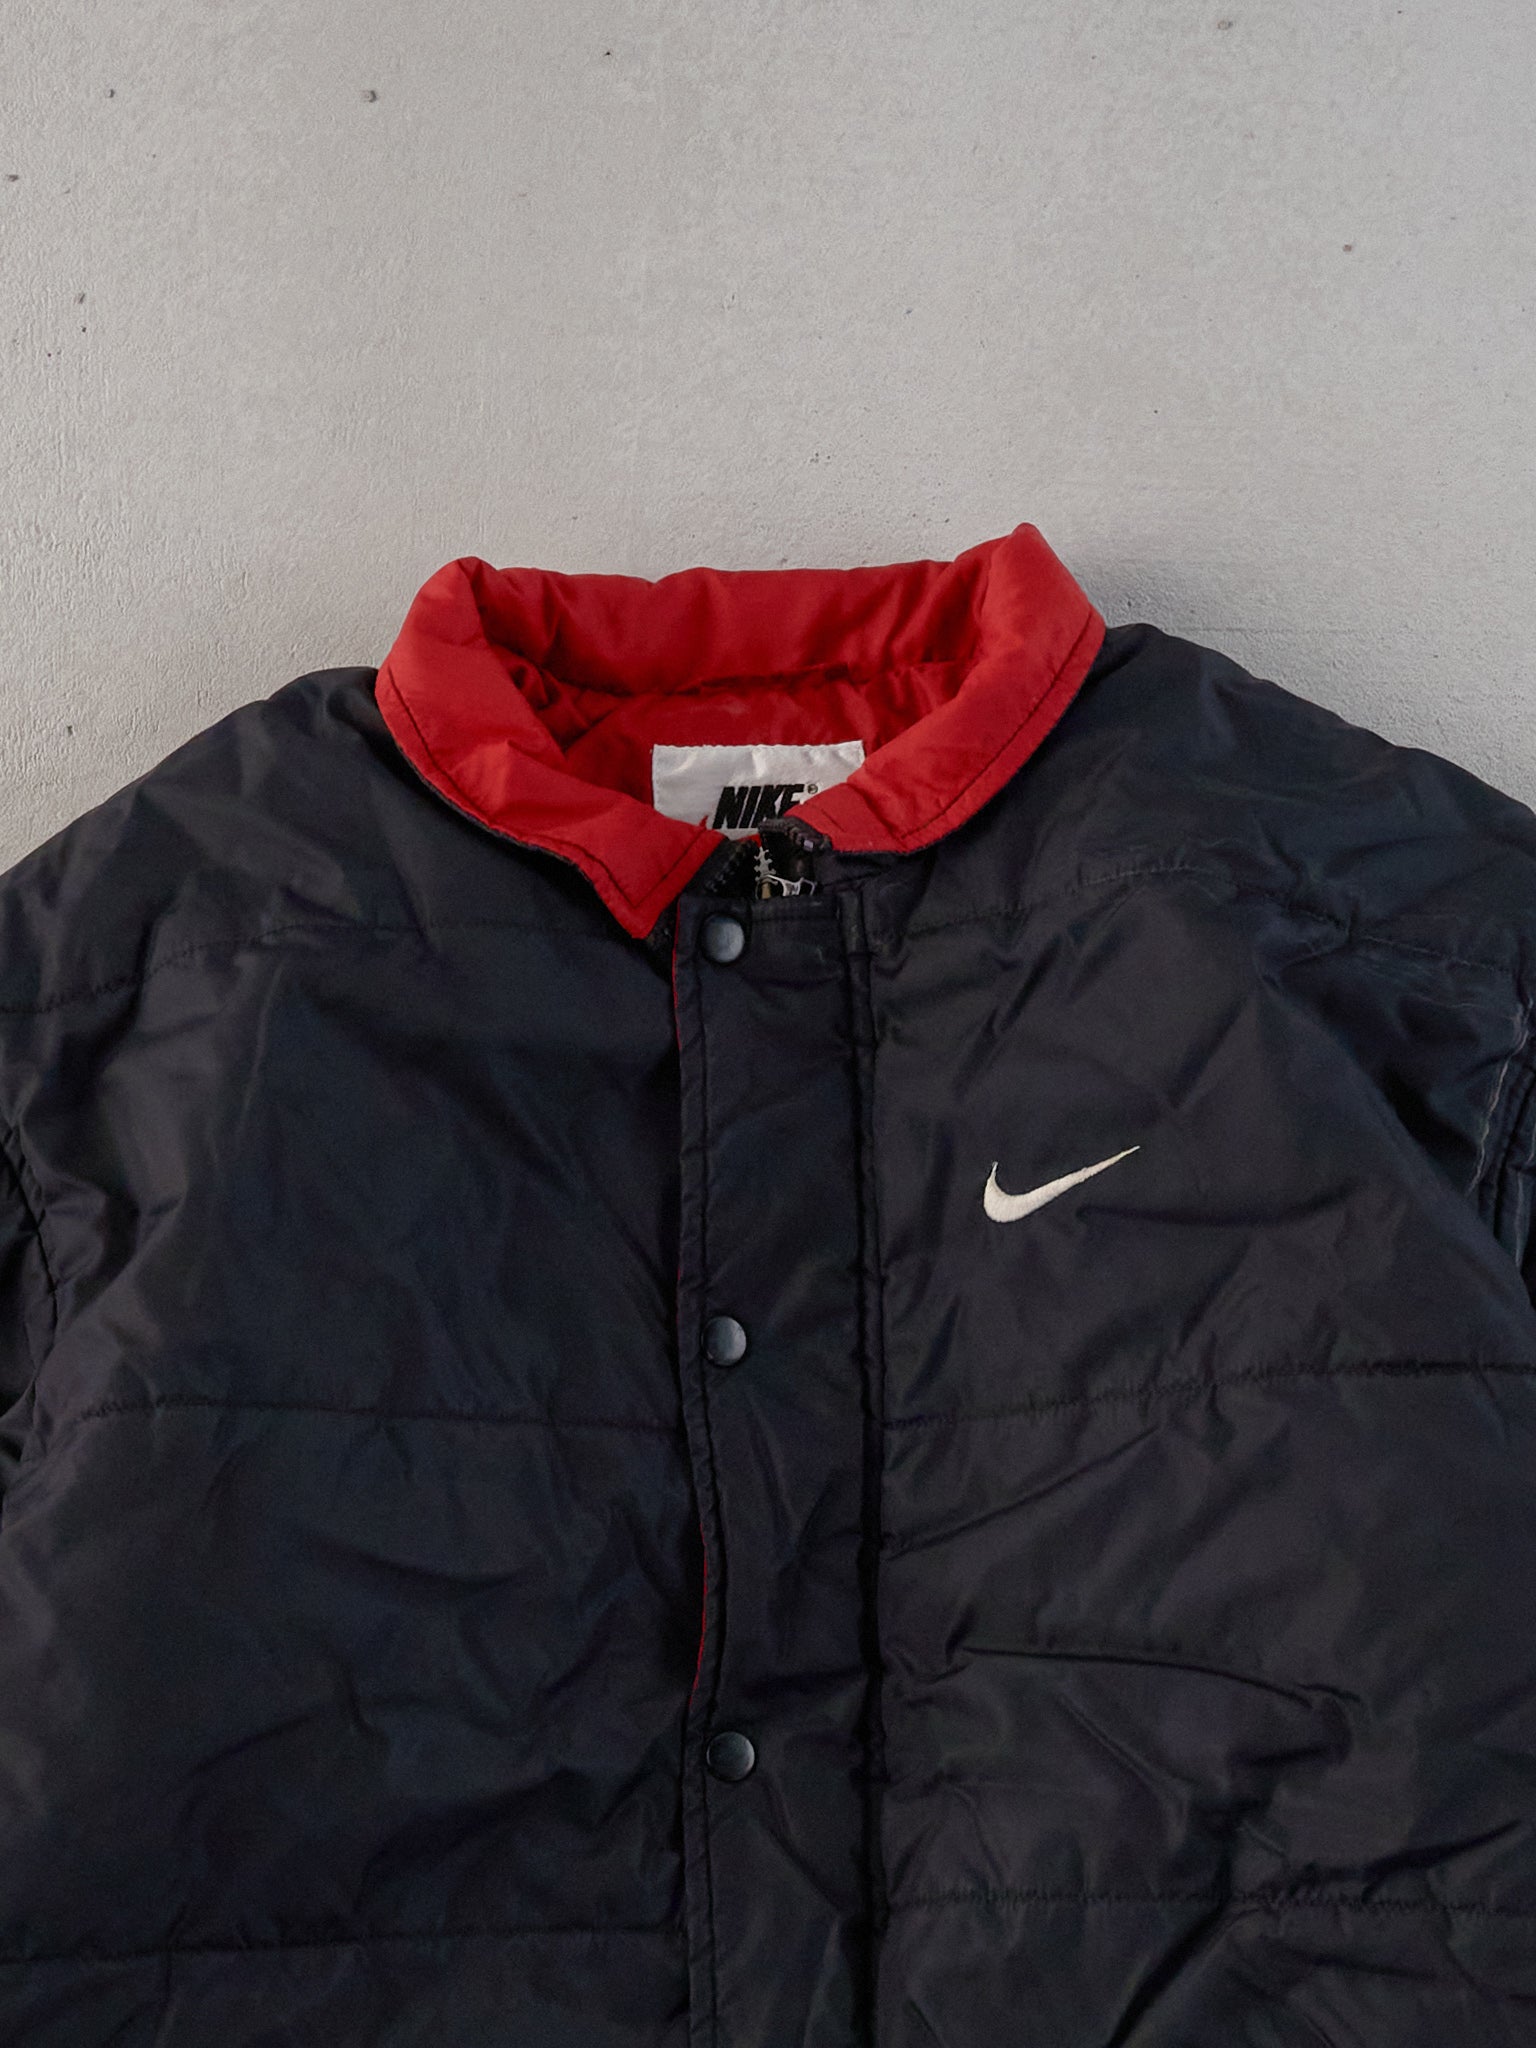 Vintage Y2k Black and Red Nike Puffer Jacket (L)